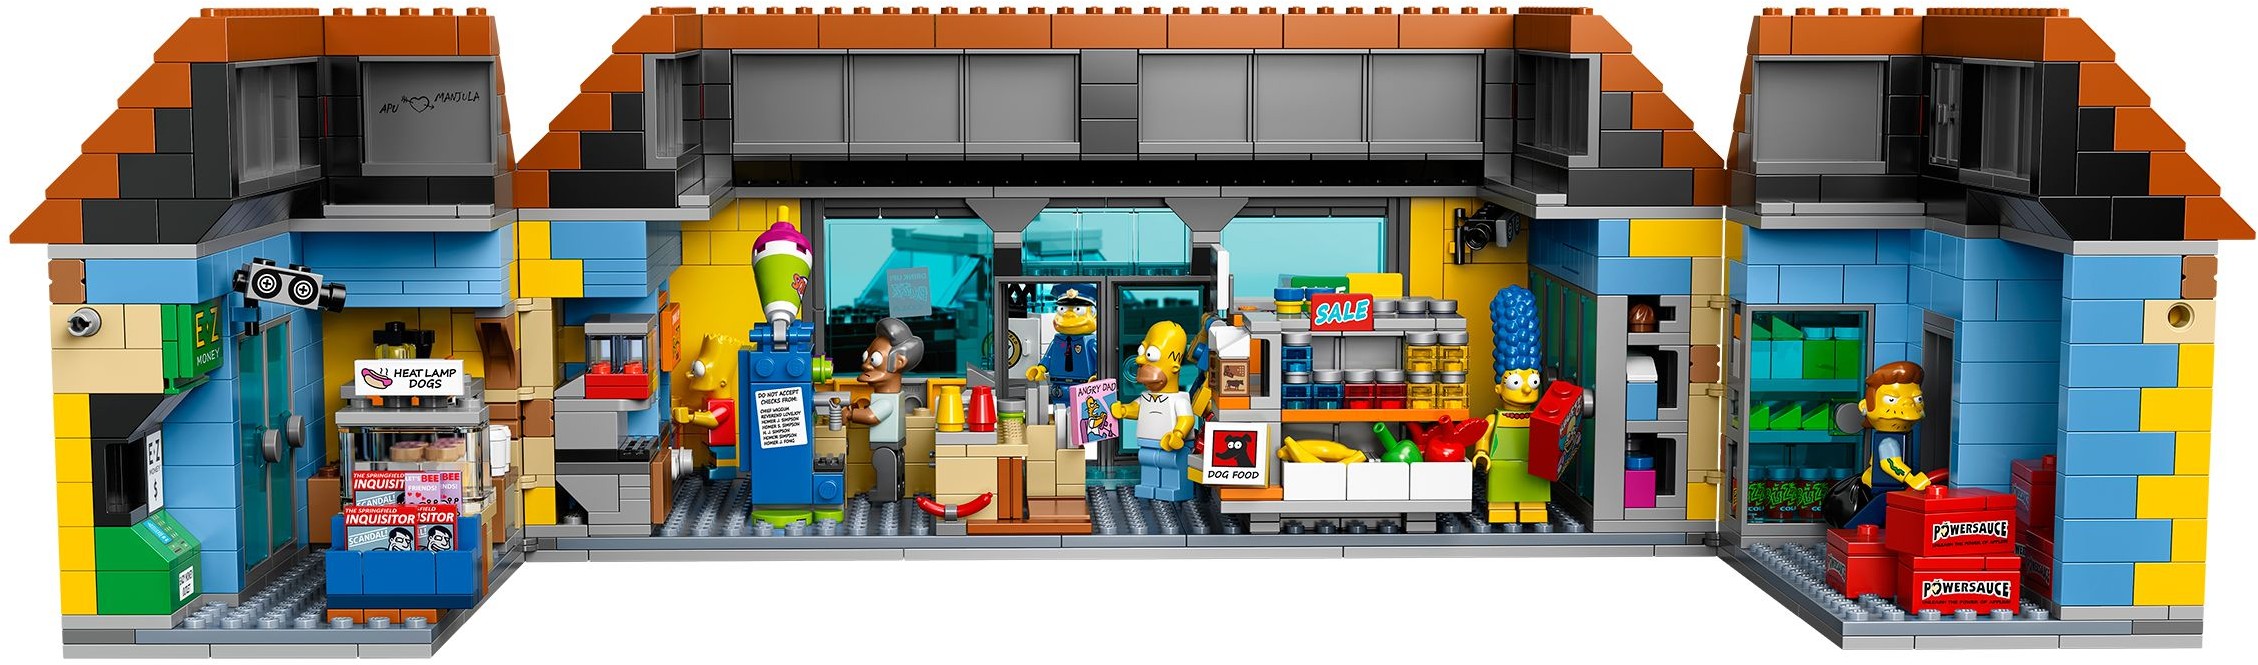 LEGO® The Simpsons™ 71016 Kwik-E-Mart NEU OVP _NEW MISB NRFB